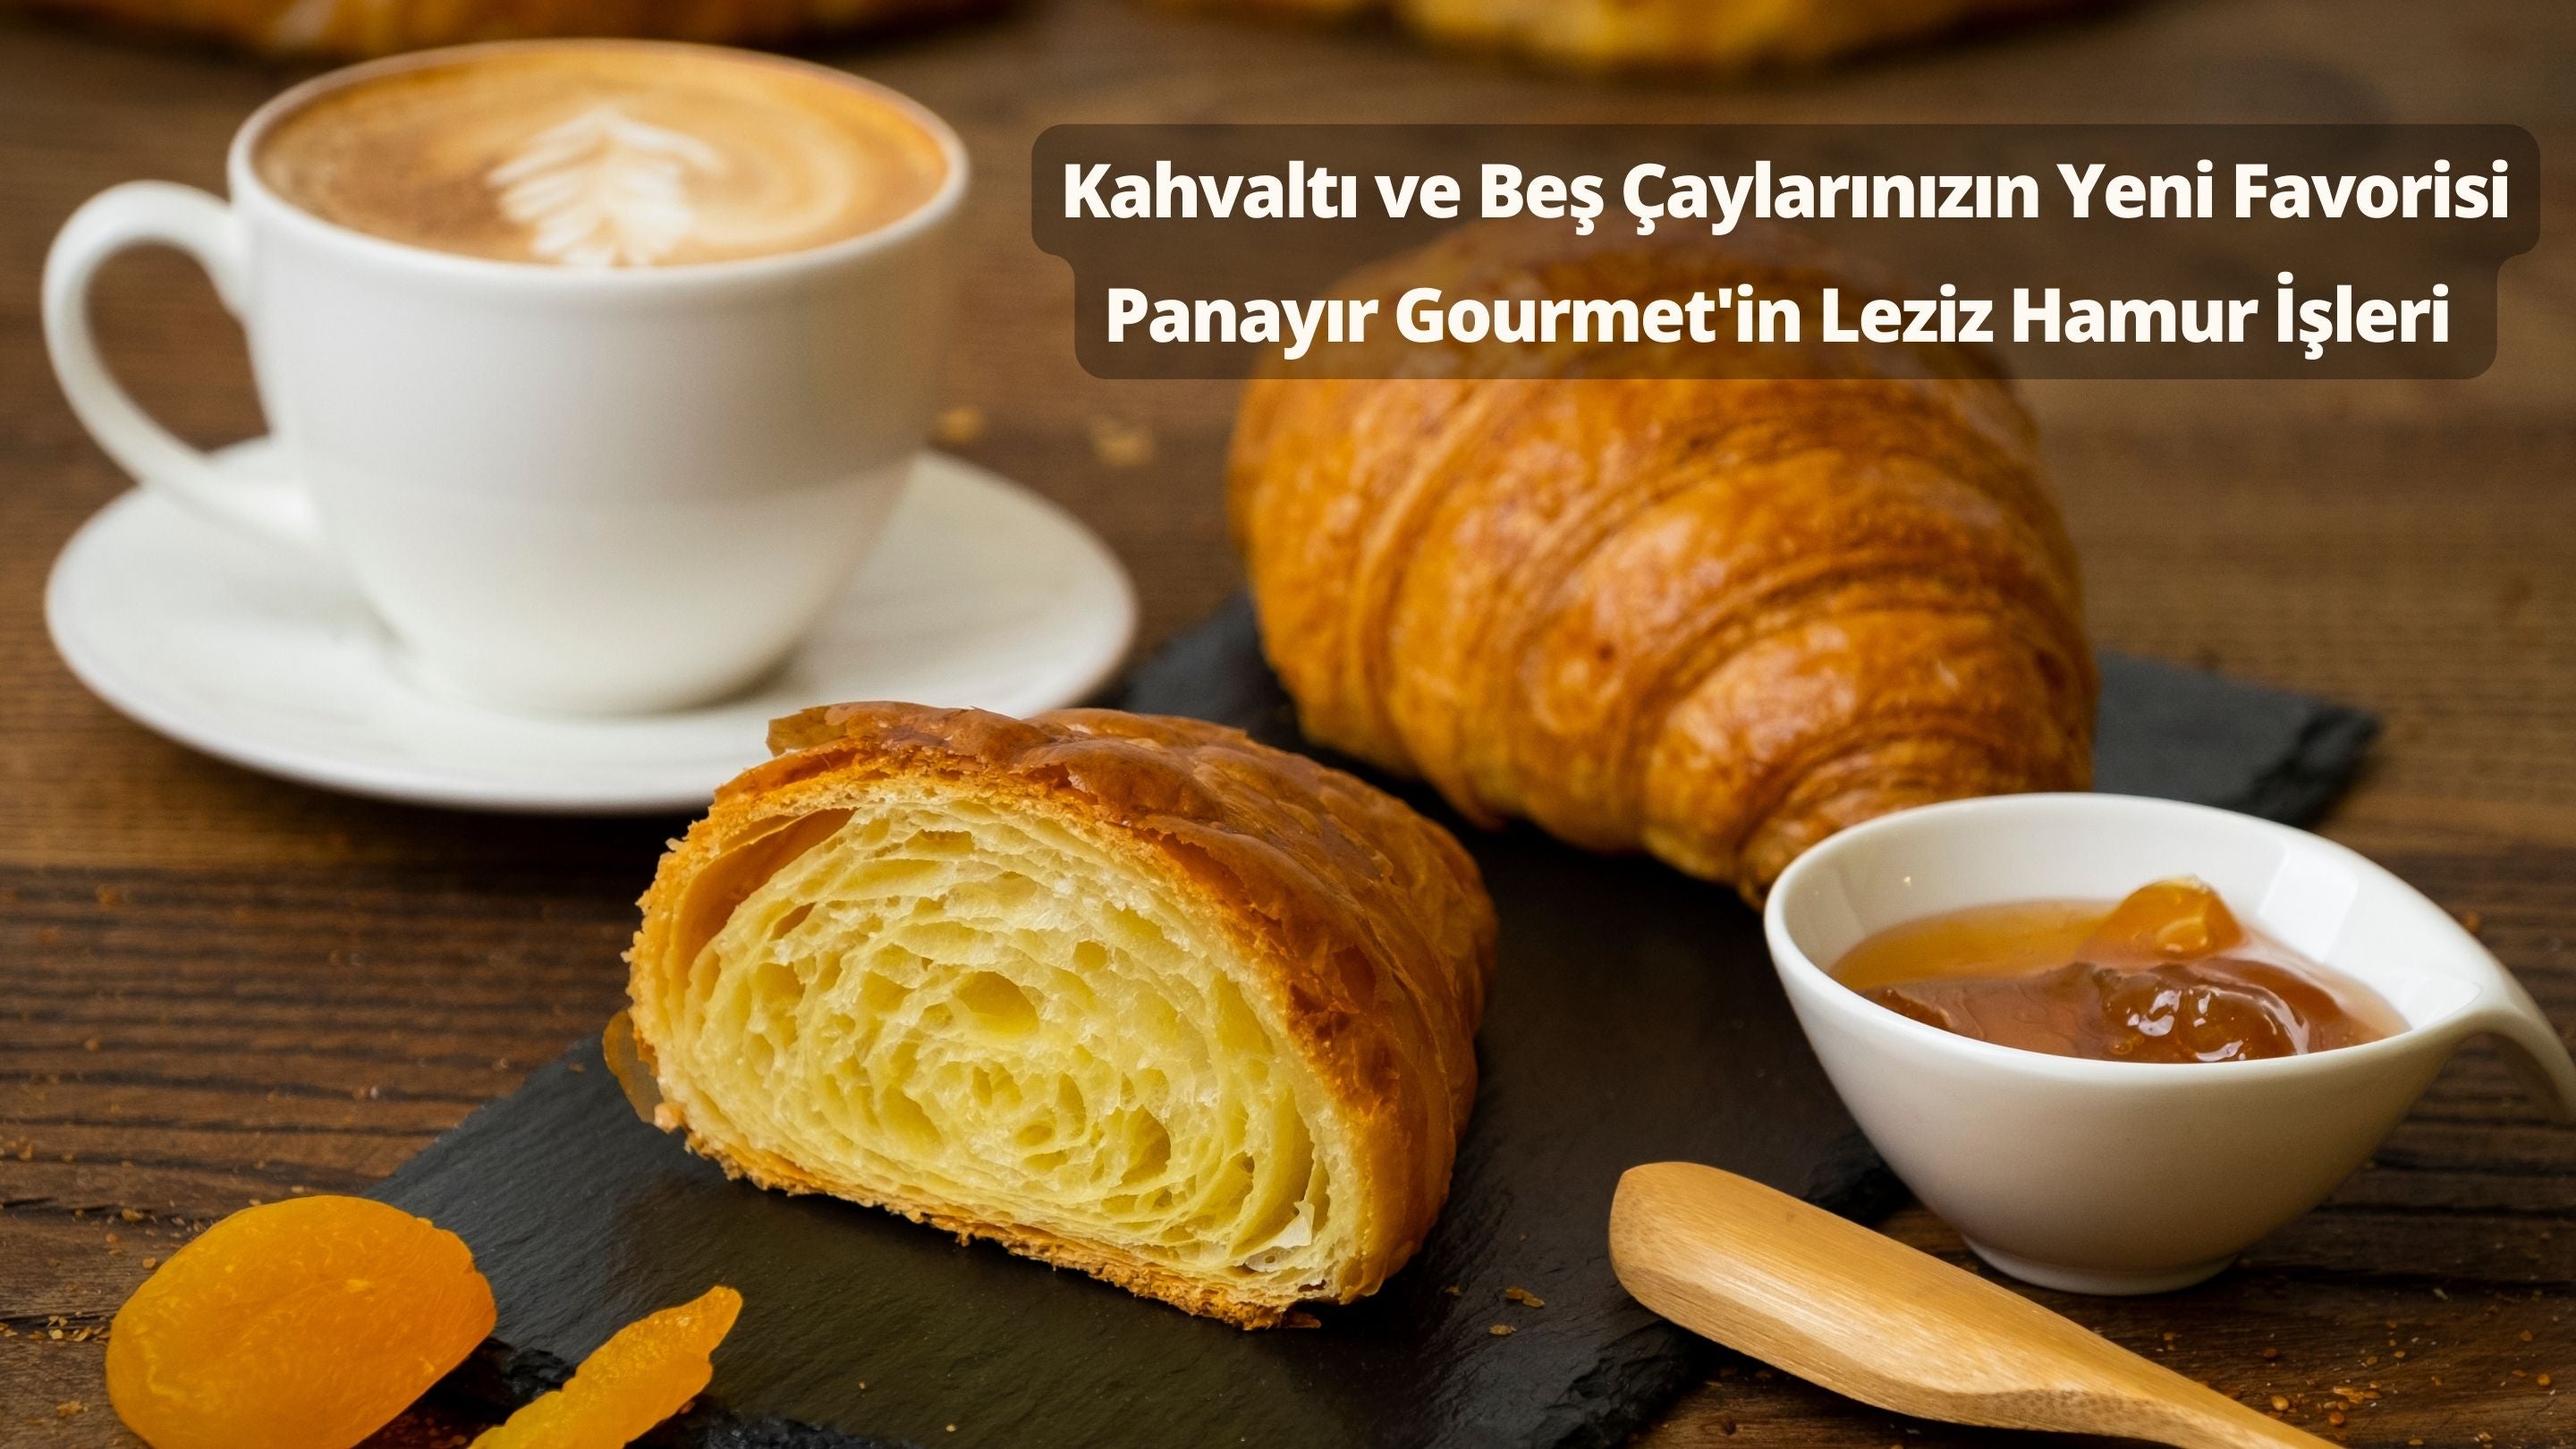 New Favorite of Afternoon Tea: Panayır Gourmet's Delicious Pastries